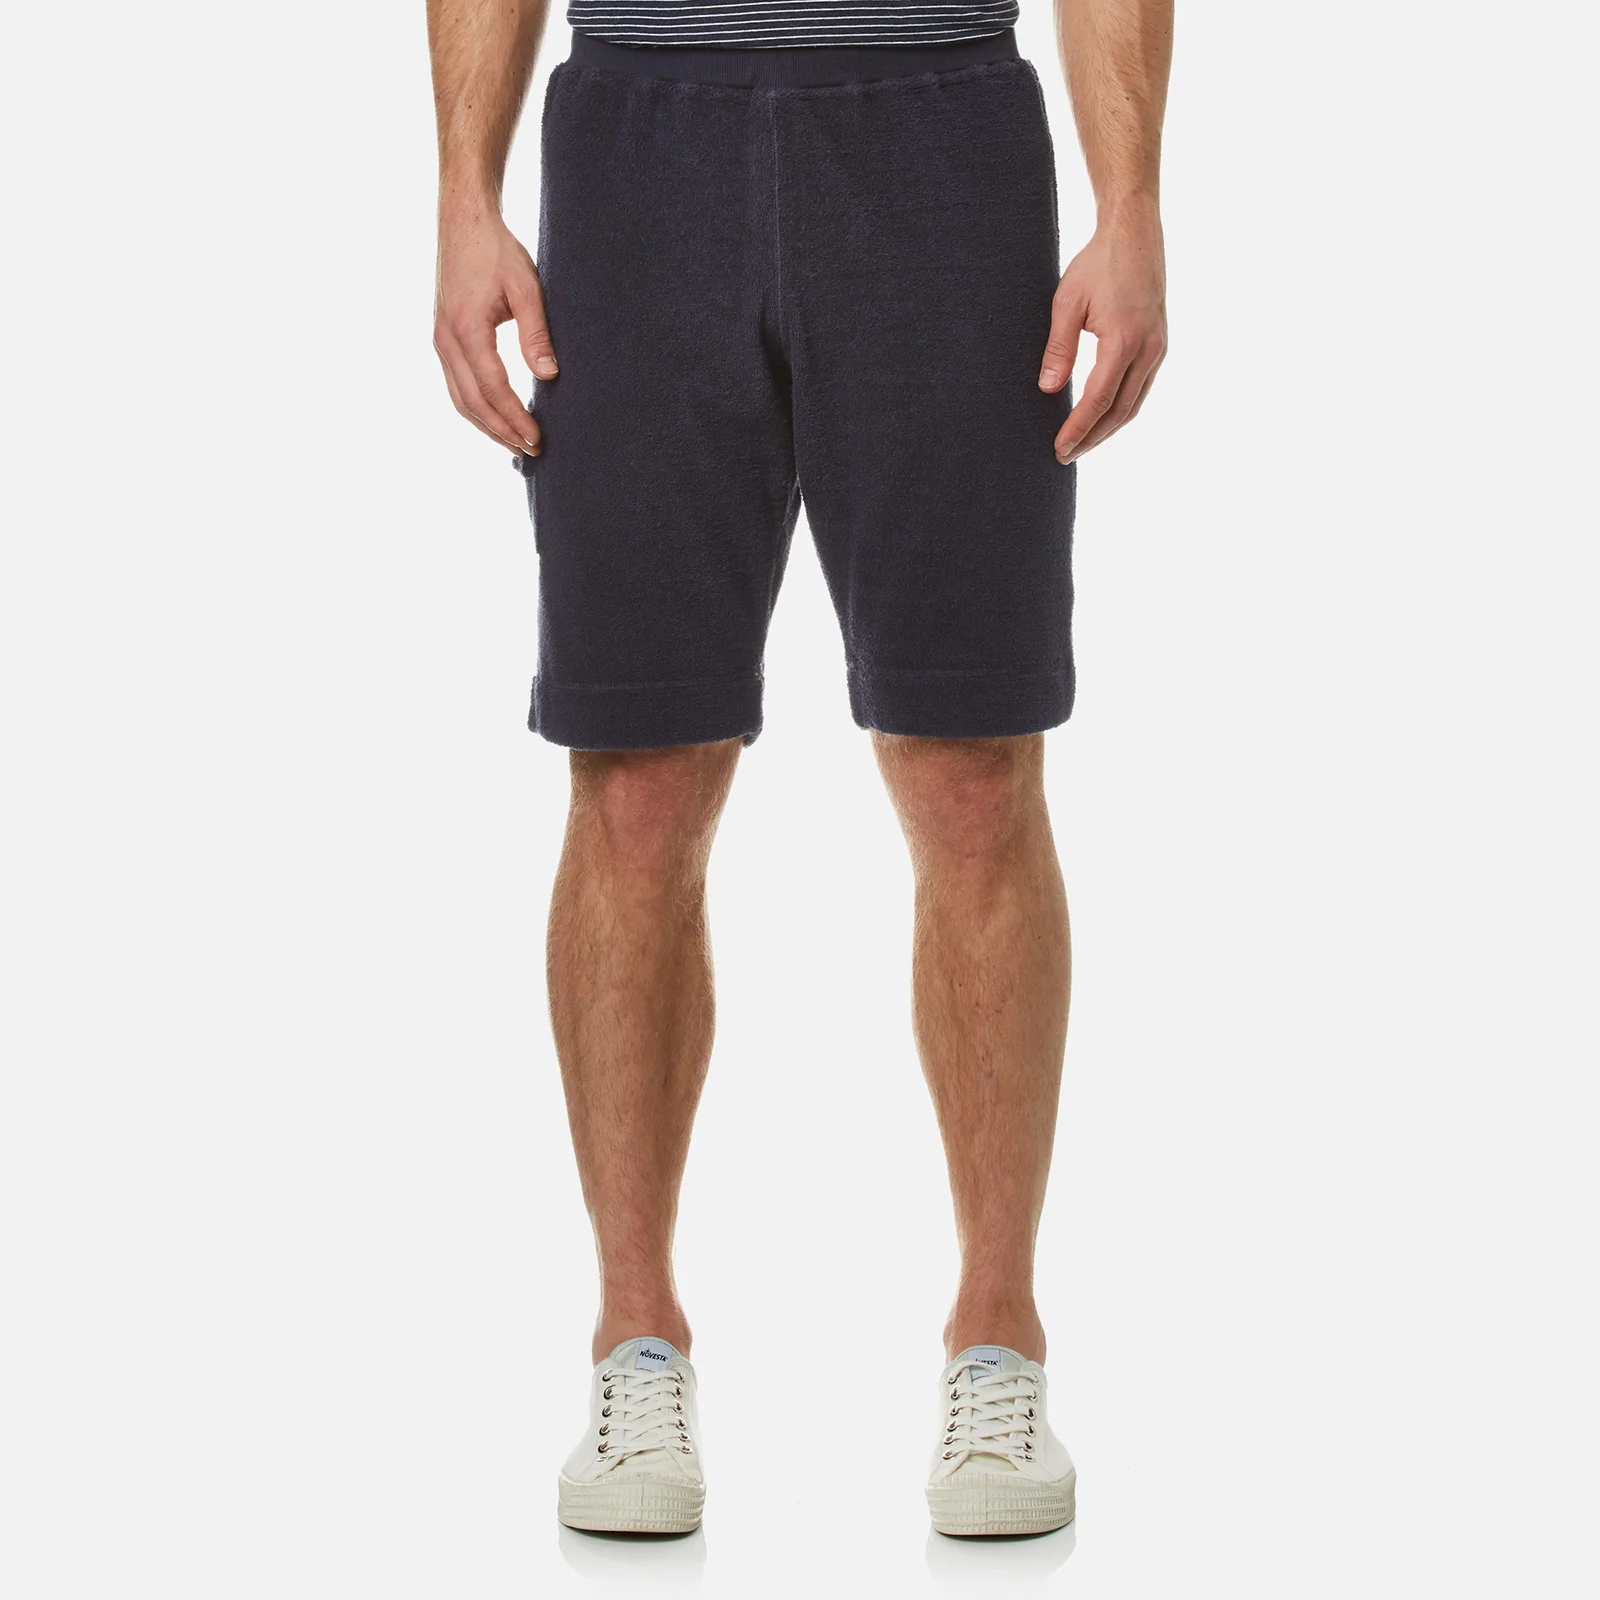 Garbstore Men's Club Shorts - Navy Image 1